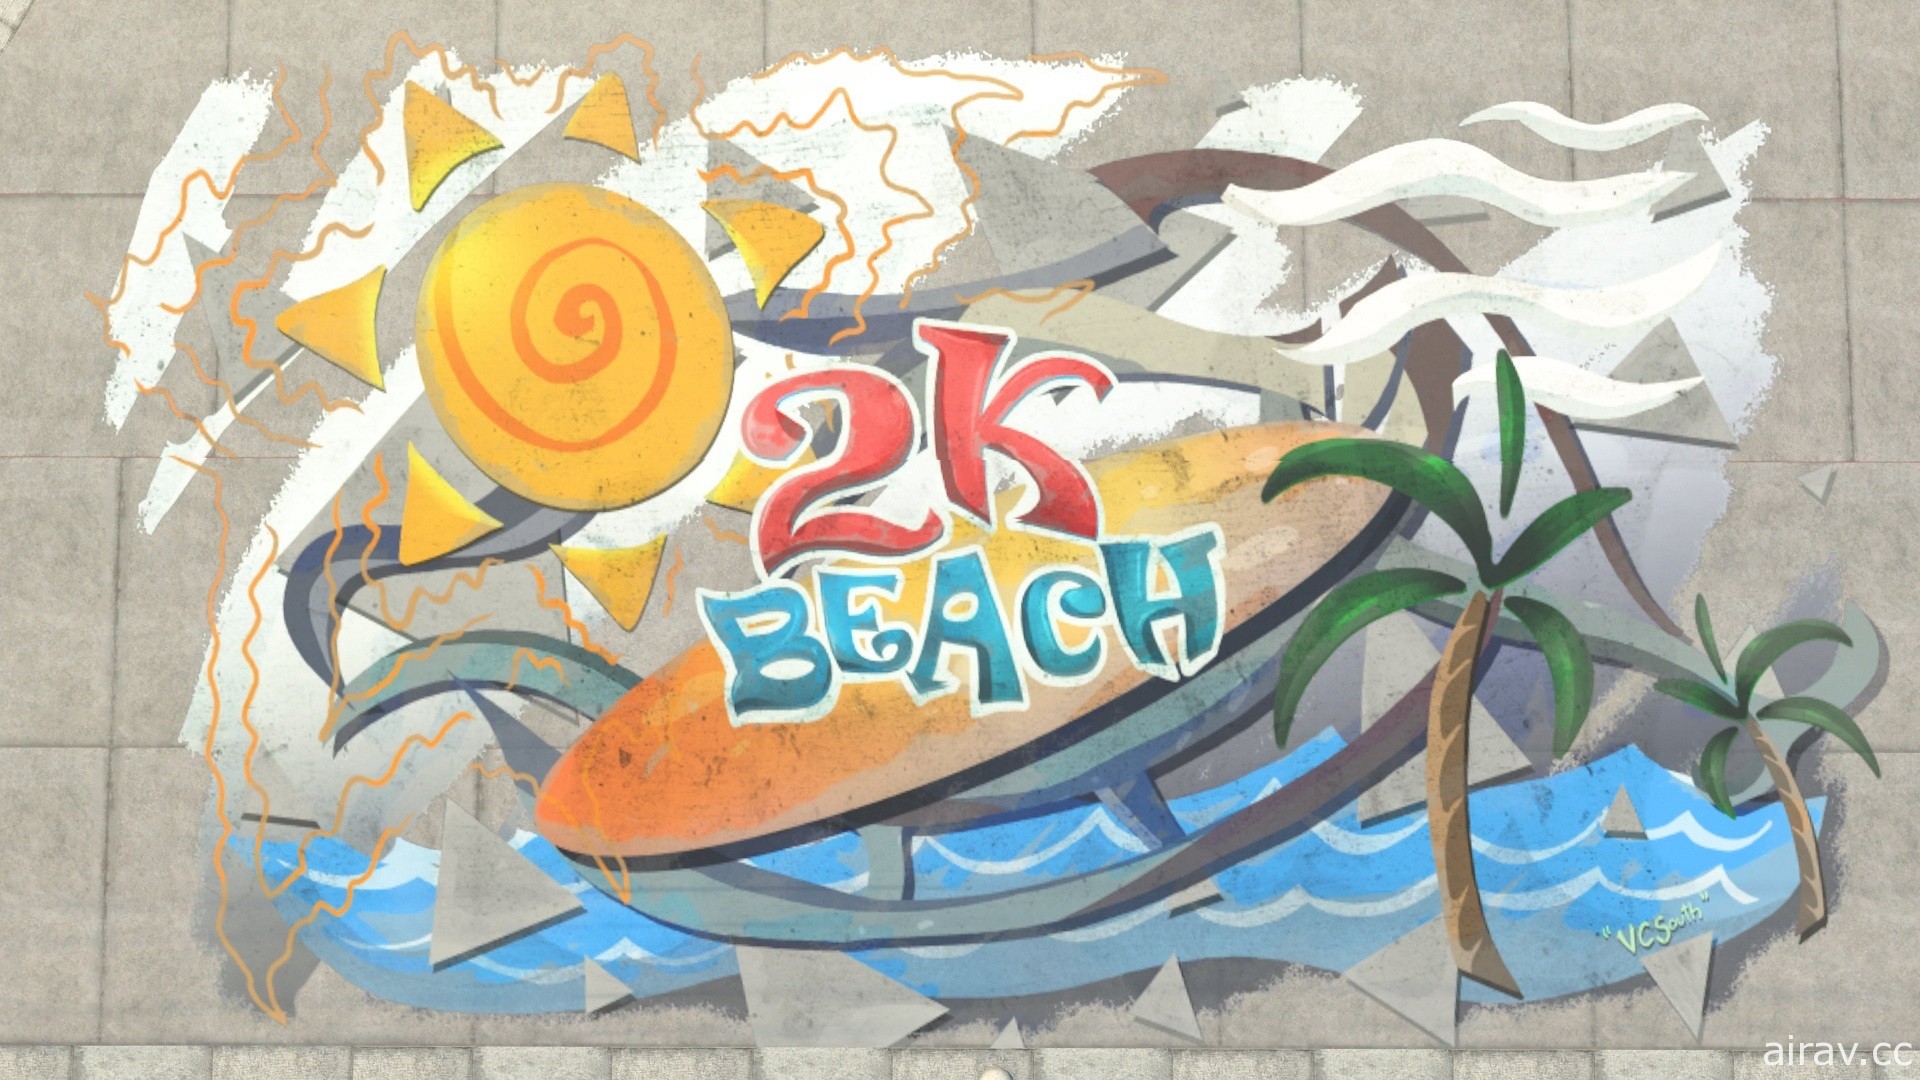 《NBA 2K21》全新 MyCAREER 宣传影片与详细资讯 最新街区 2K 海滩华丽登场